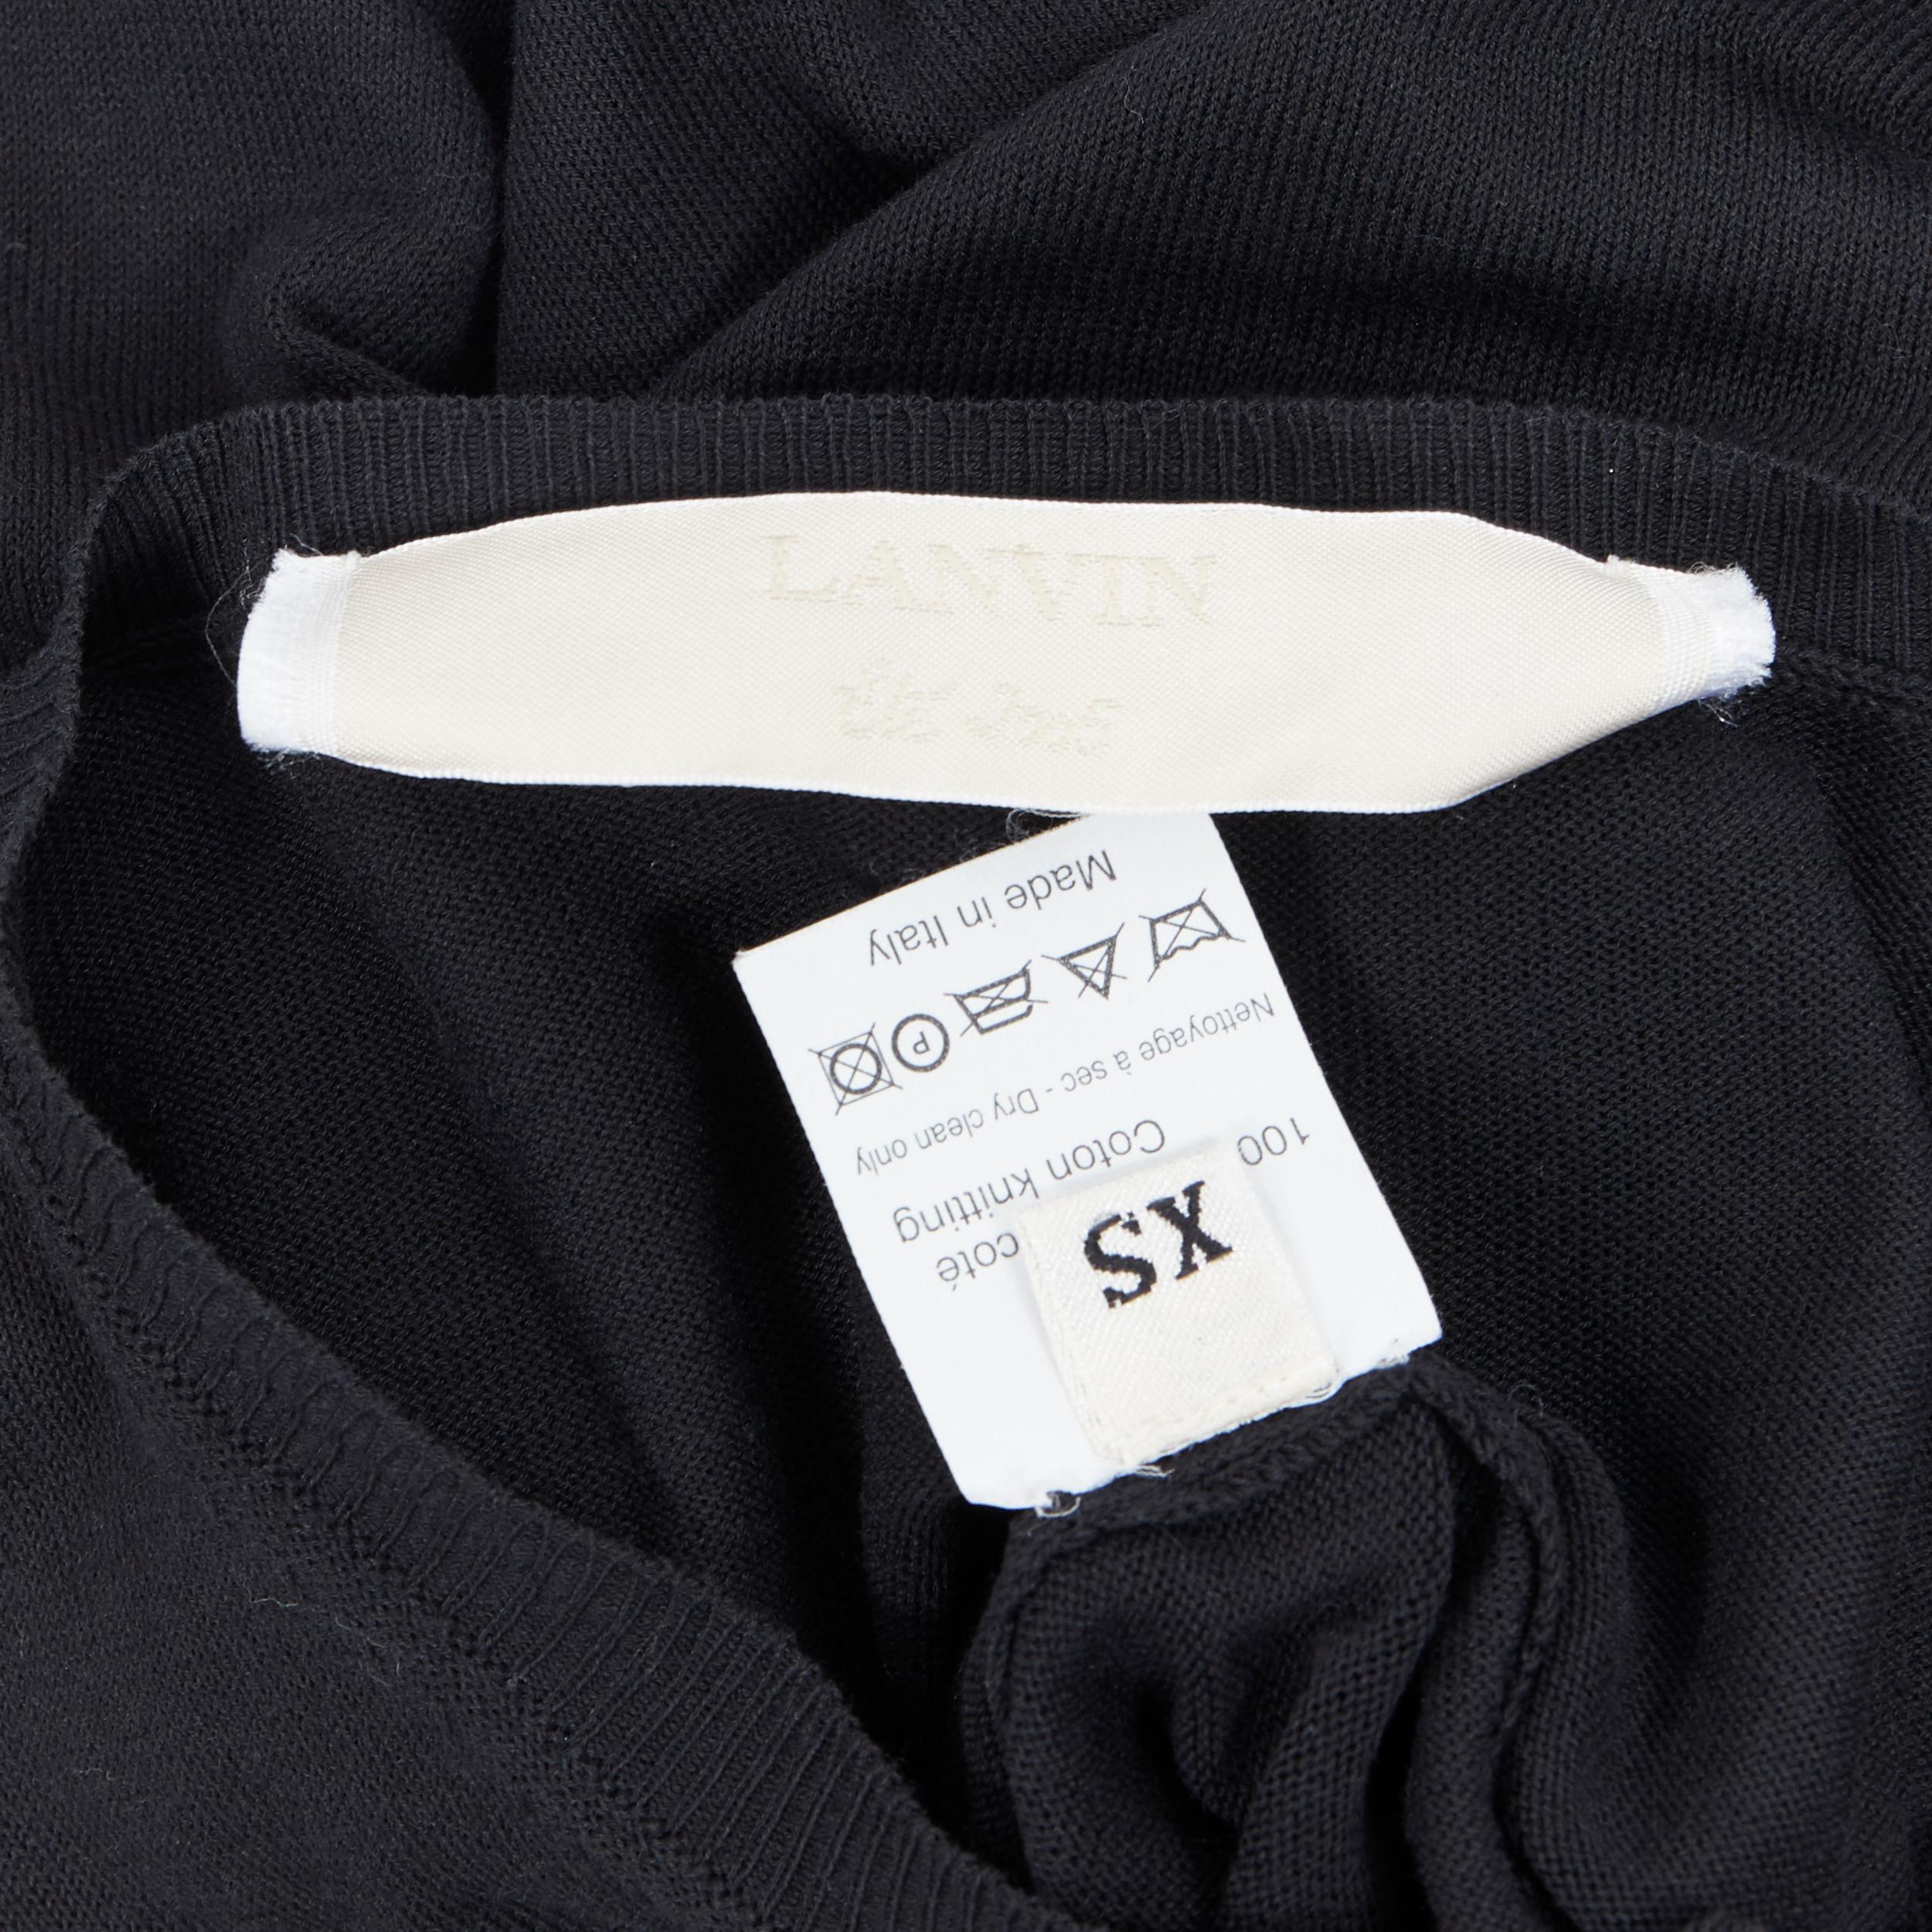 LANVIN Elbaz 2005 100% cotton wide sleeve silk button cardigan sweater XS 2